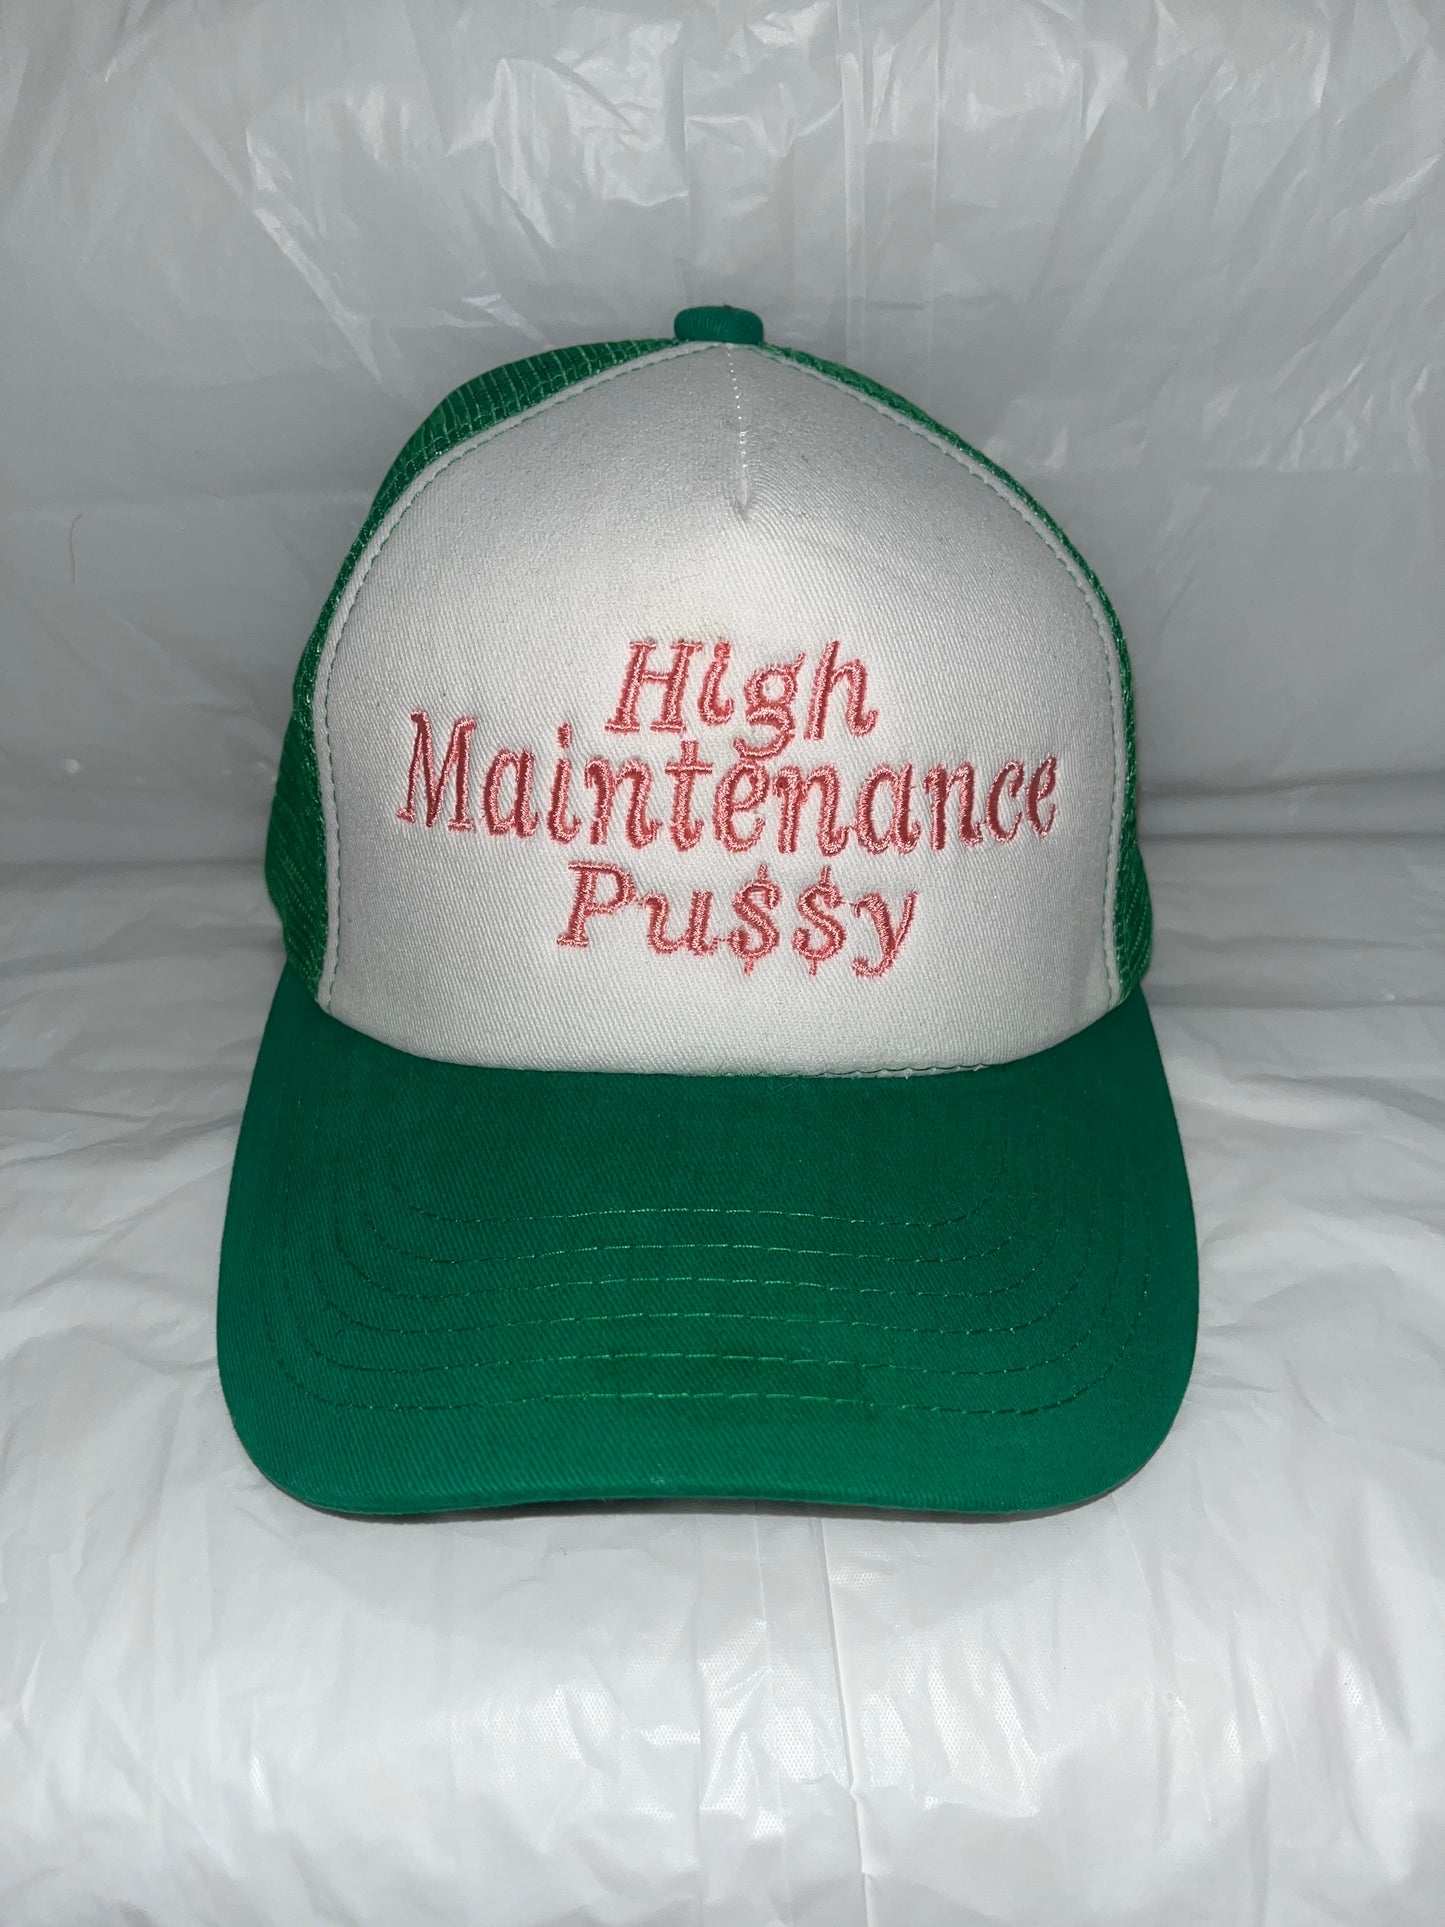 High Maintenance Pu$$y trucker